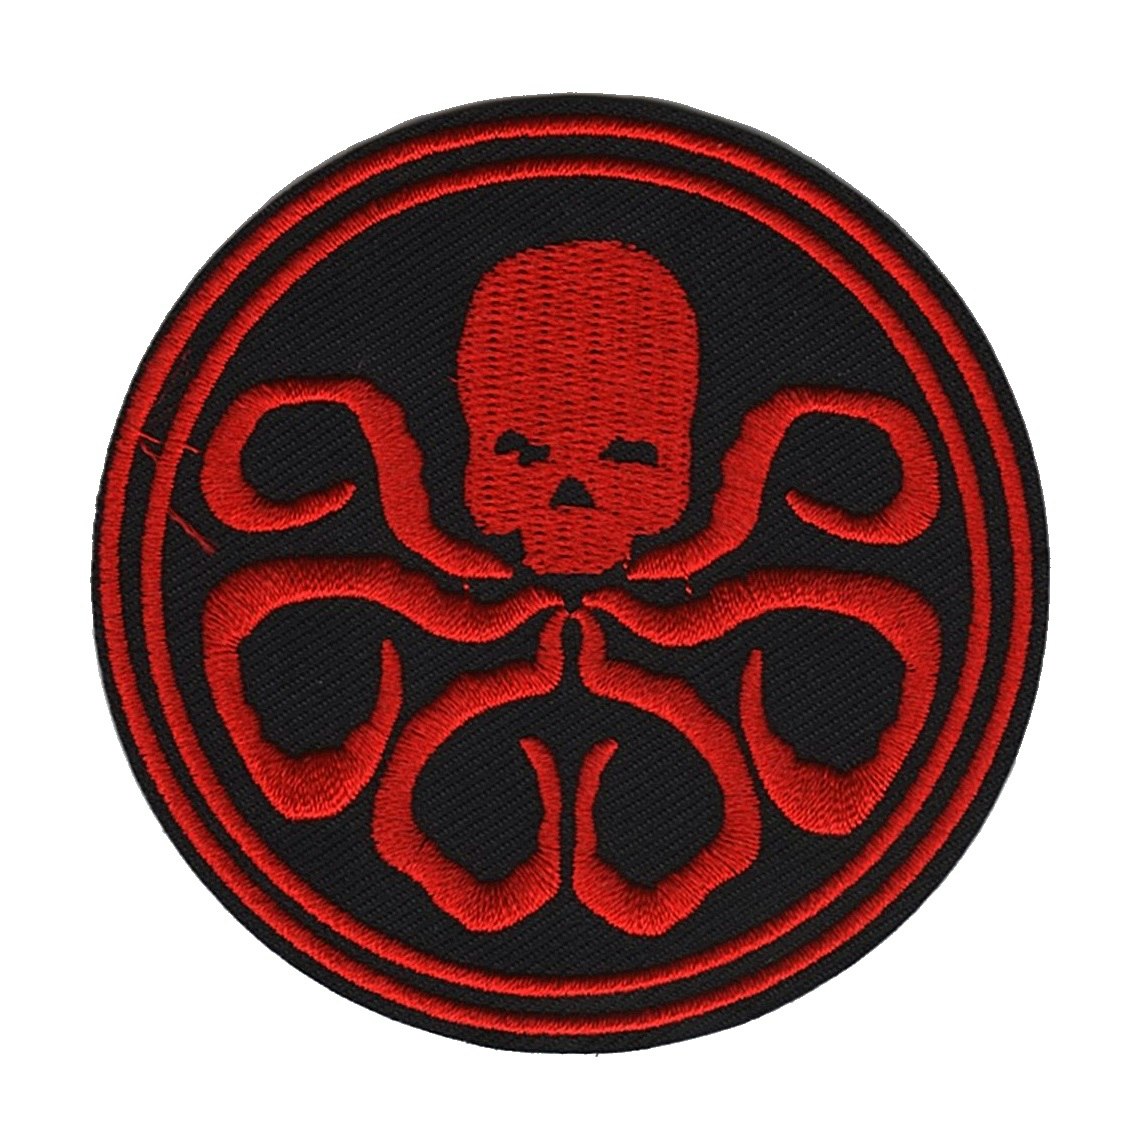 Hydra emblem